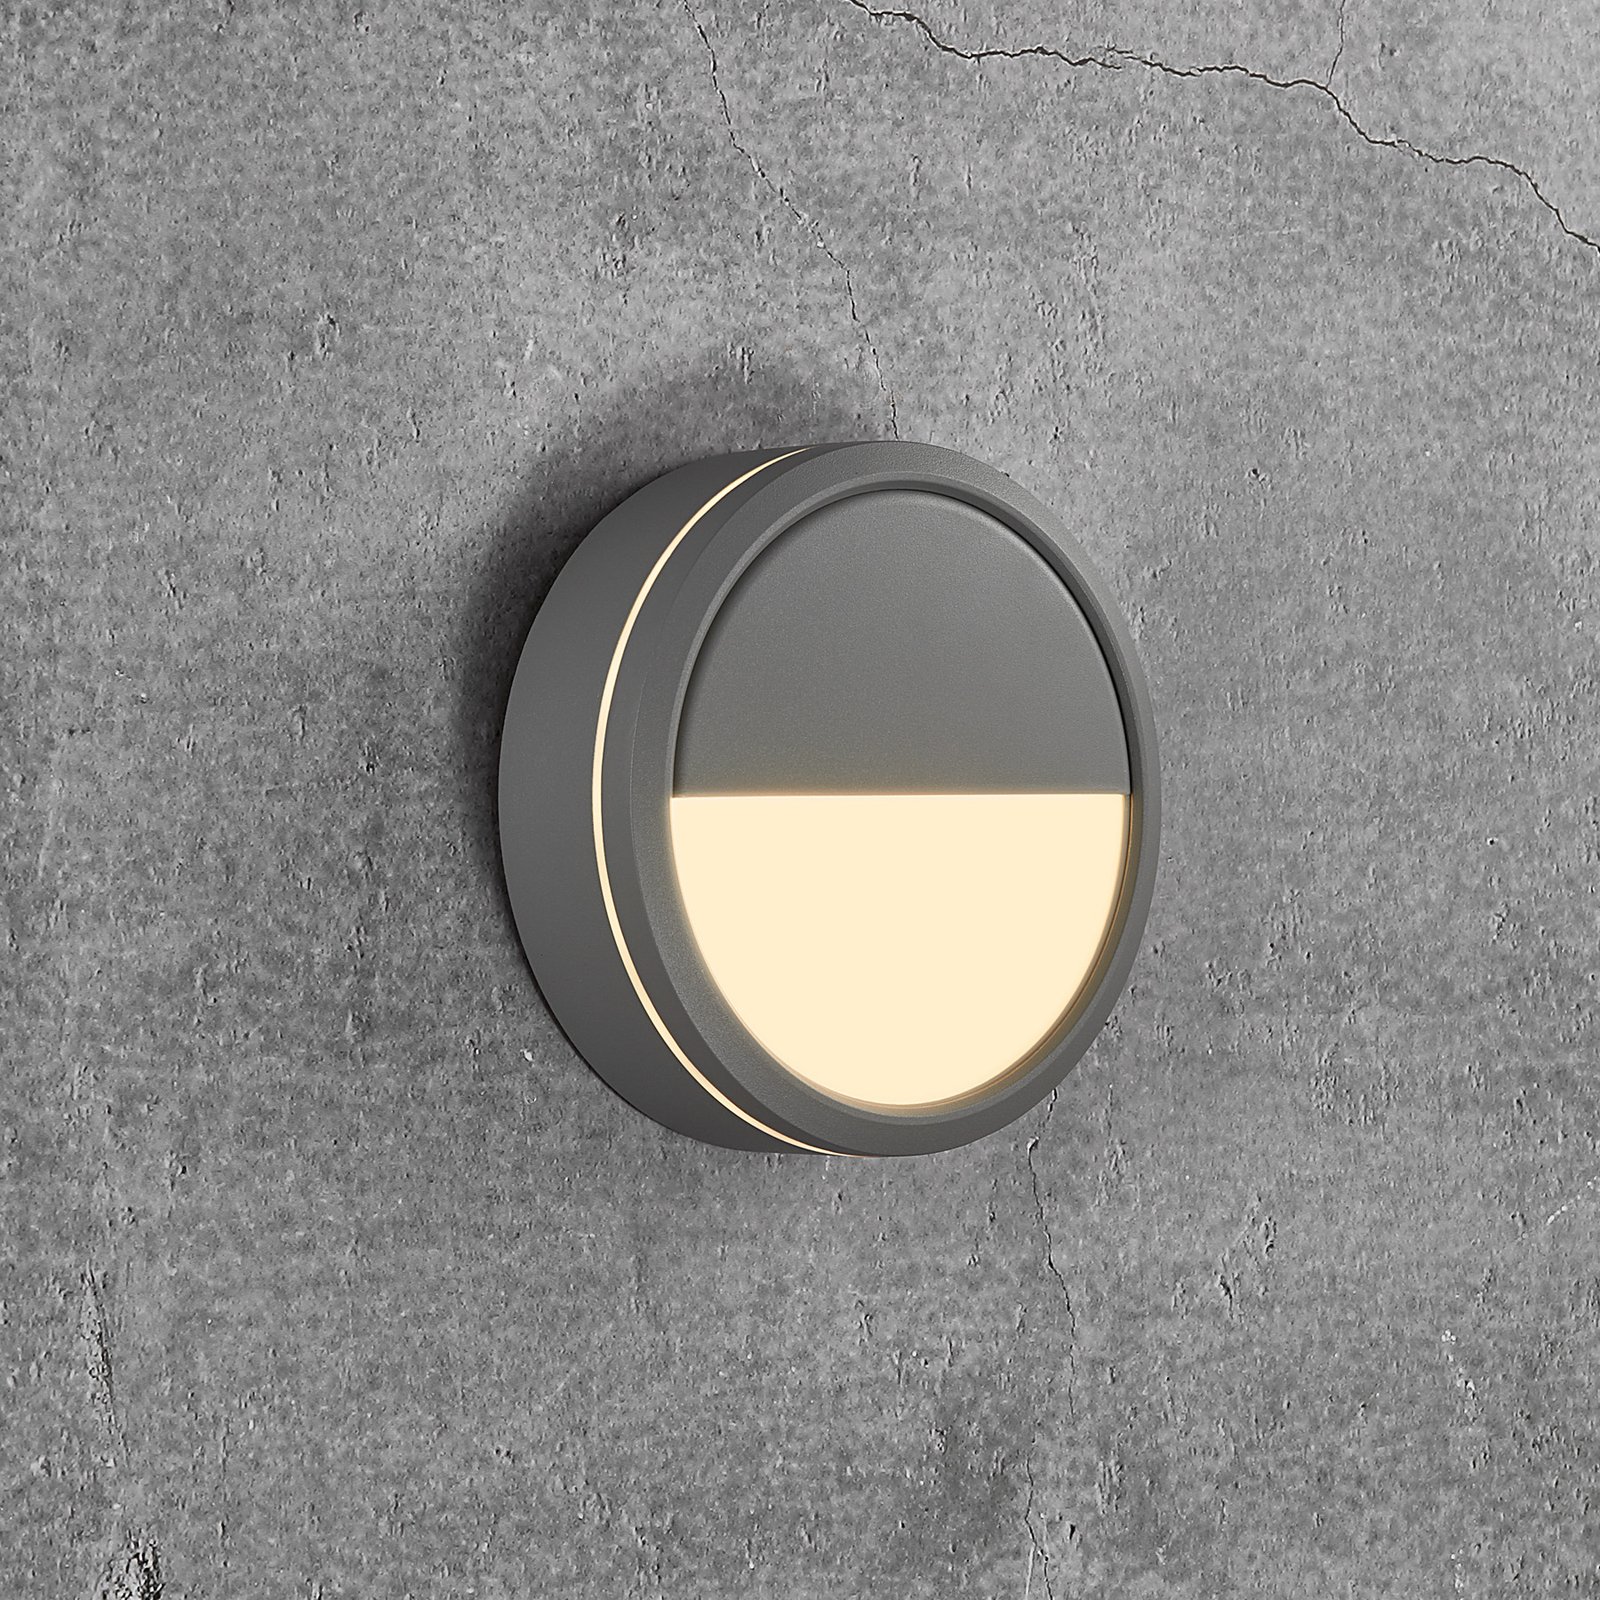 Outdoor LED wall light Ava Smart, grey